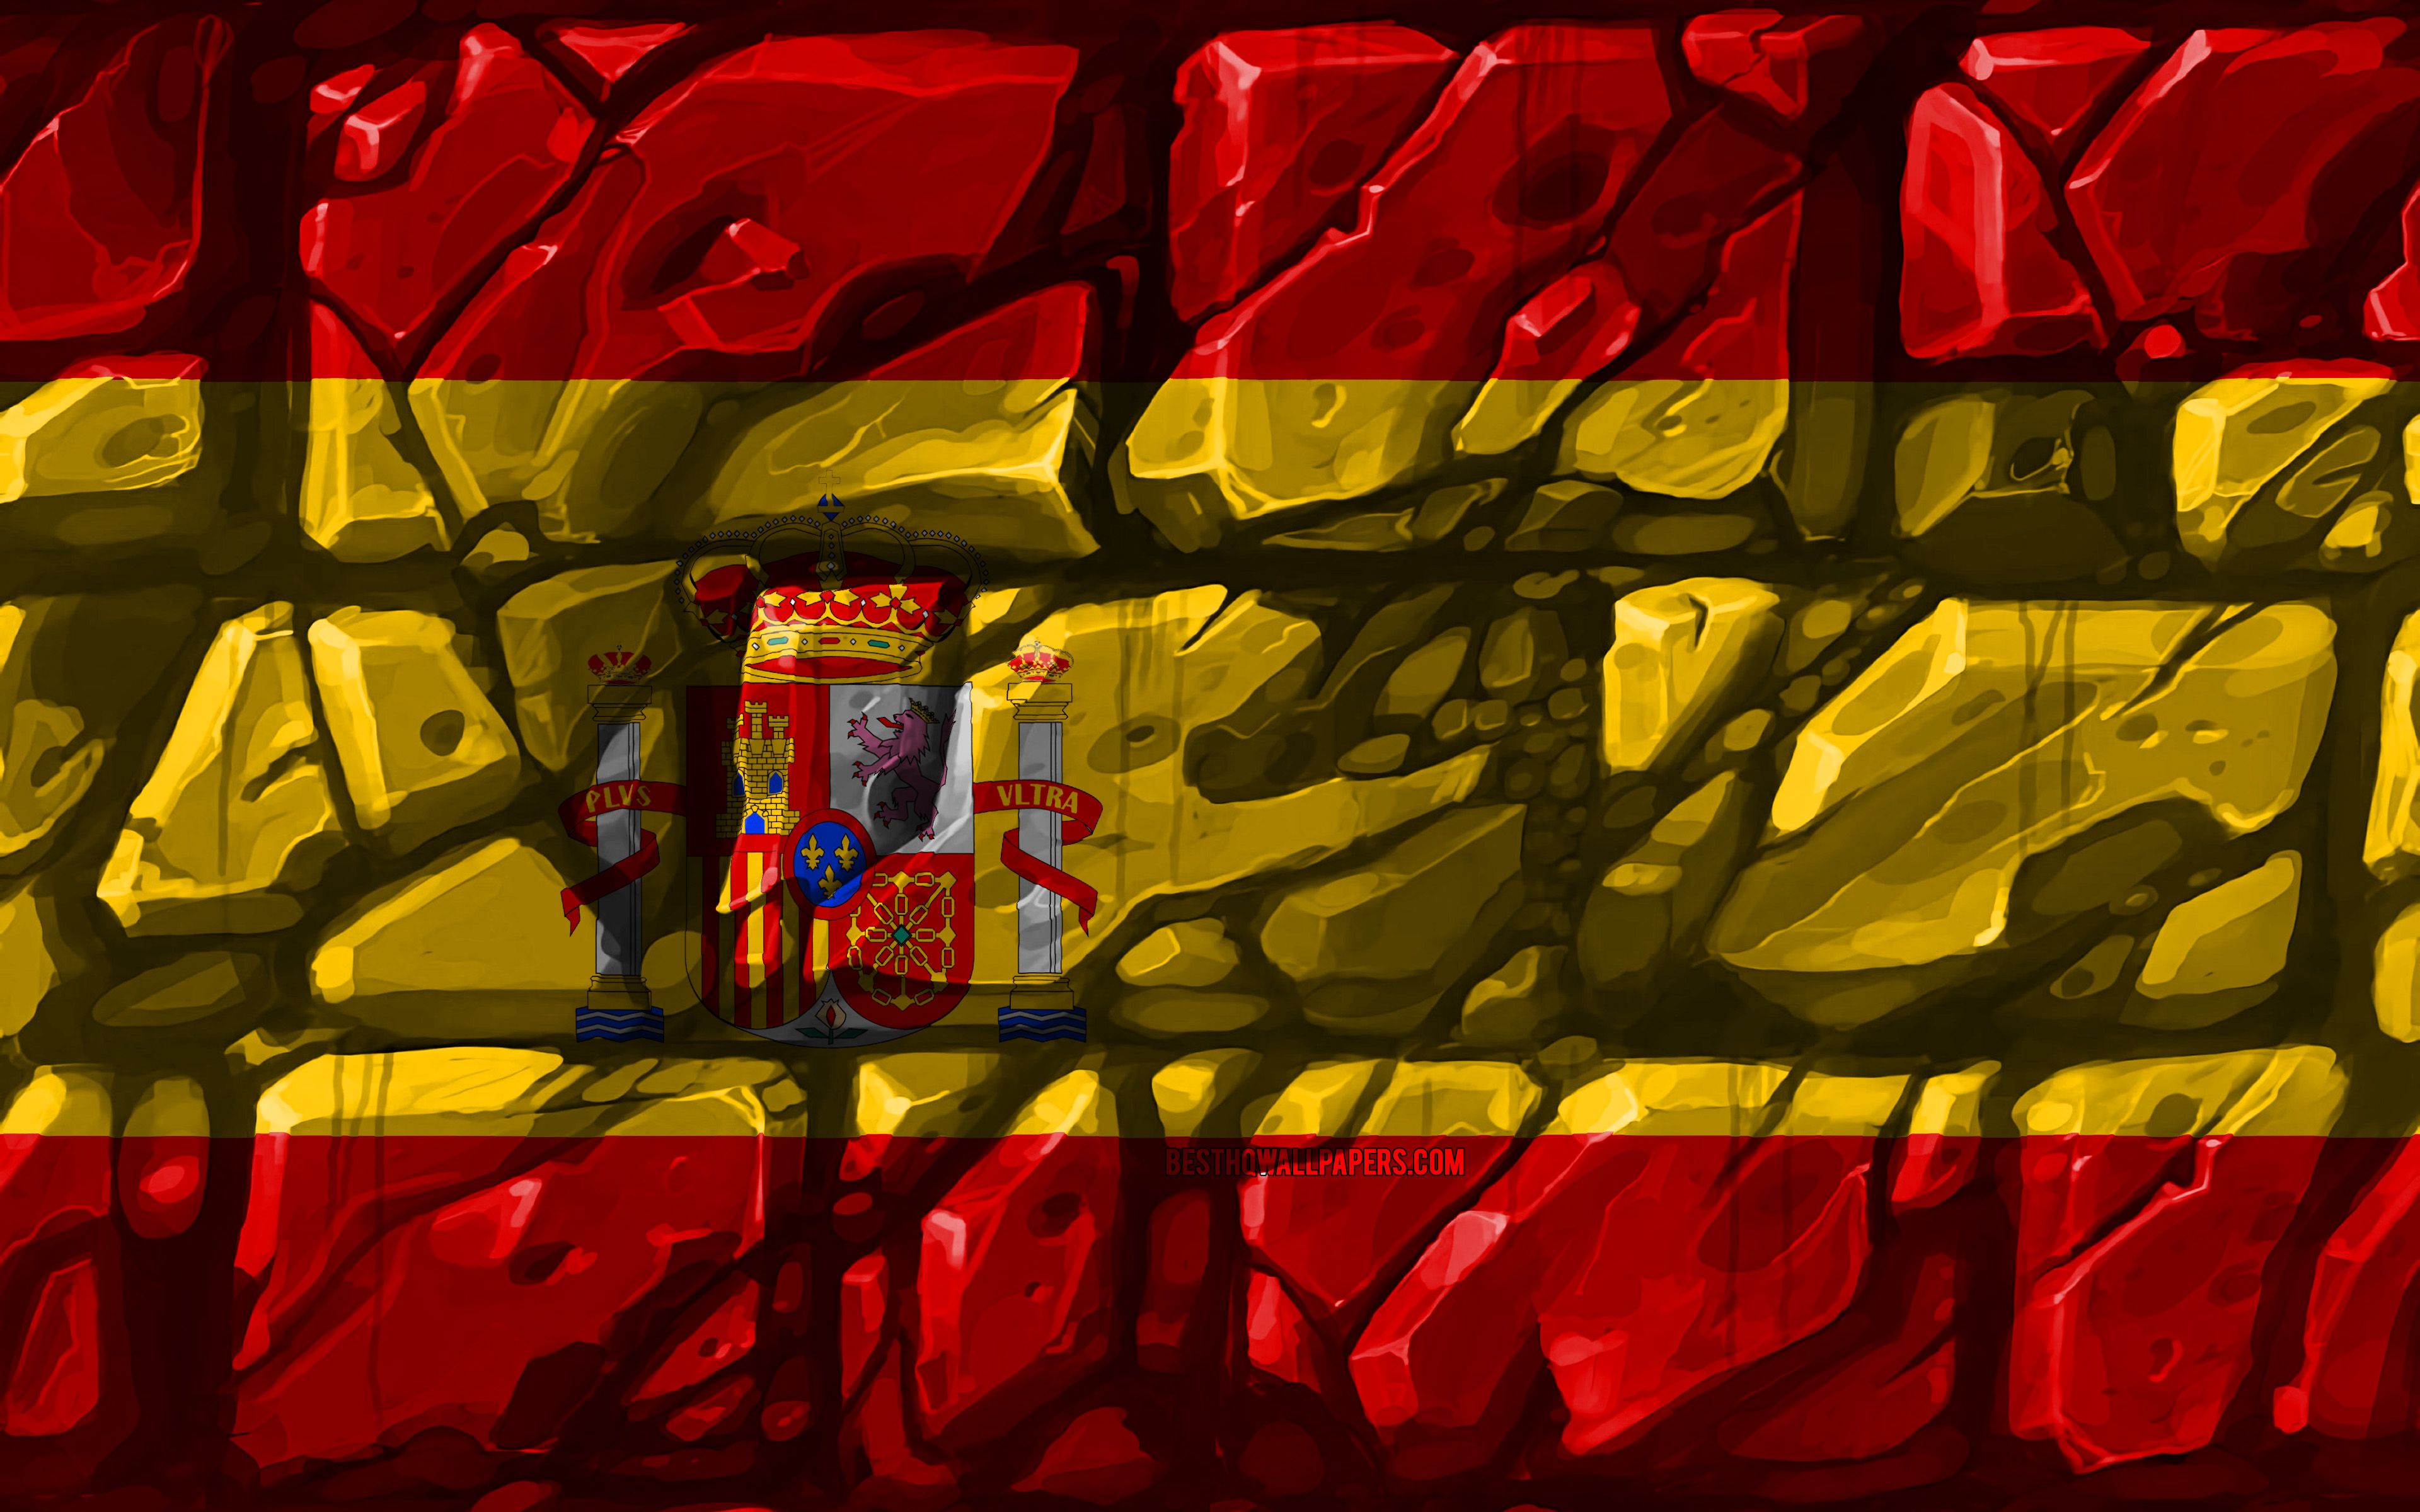 Fondos de pantalla de la bandera de España - FondosMil